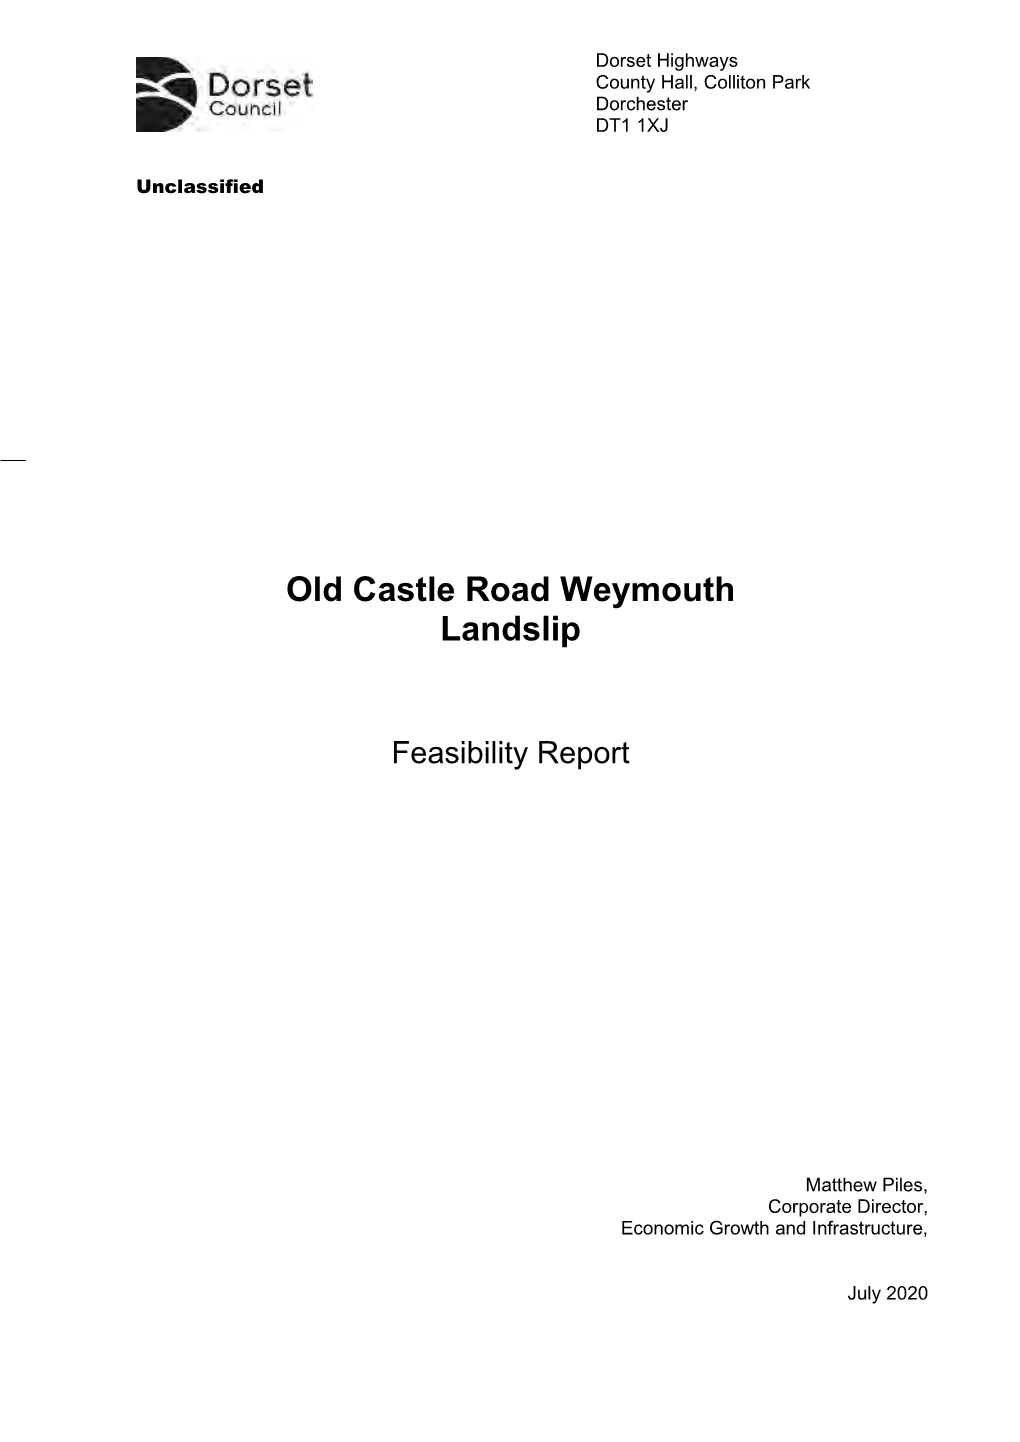 Old Castle Road Weymouth Landslip